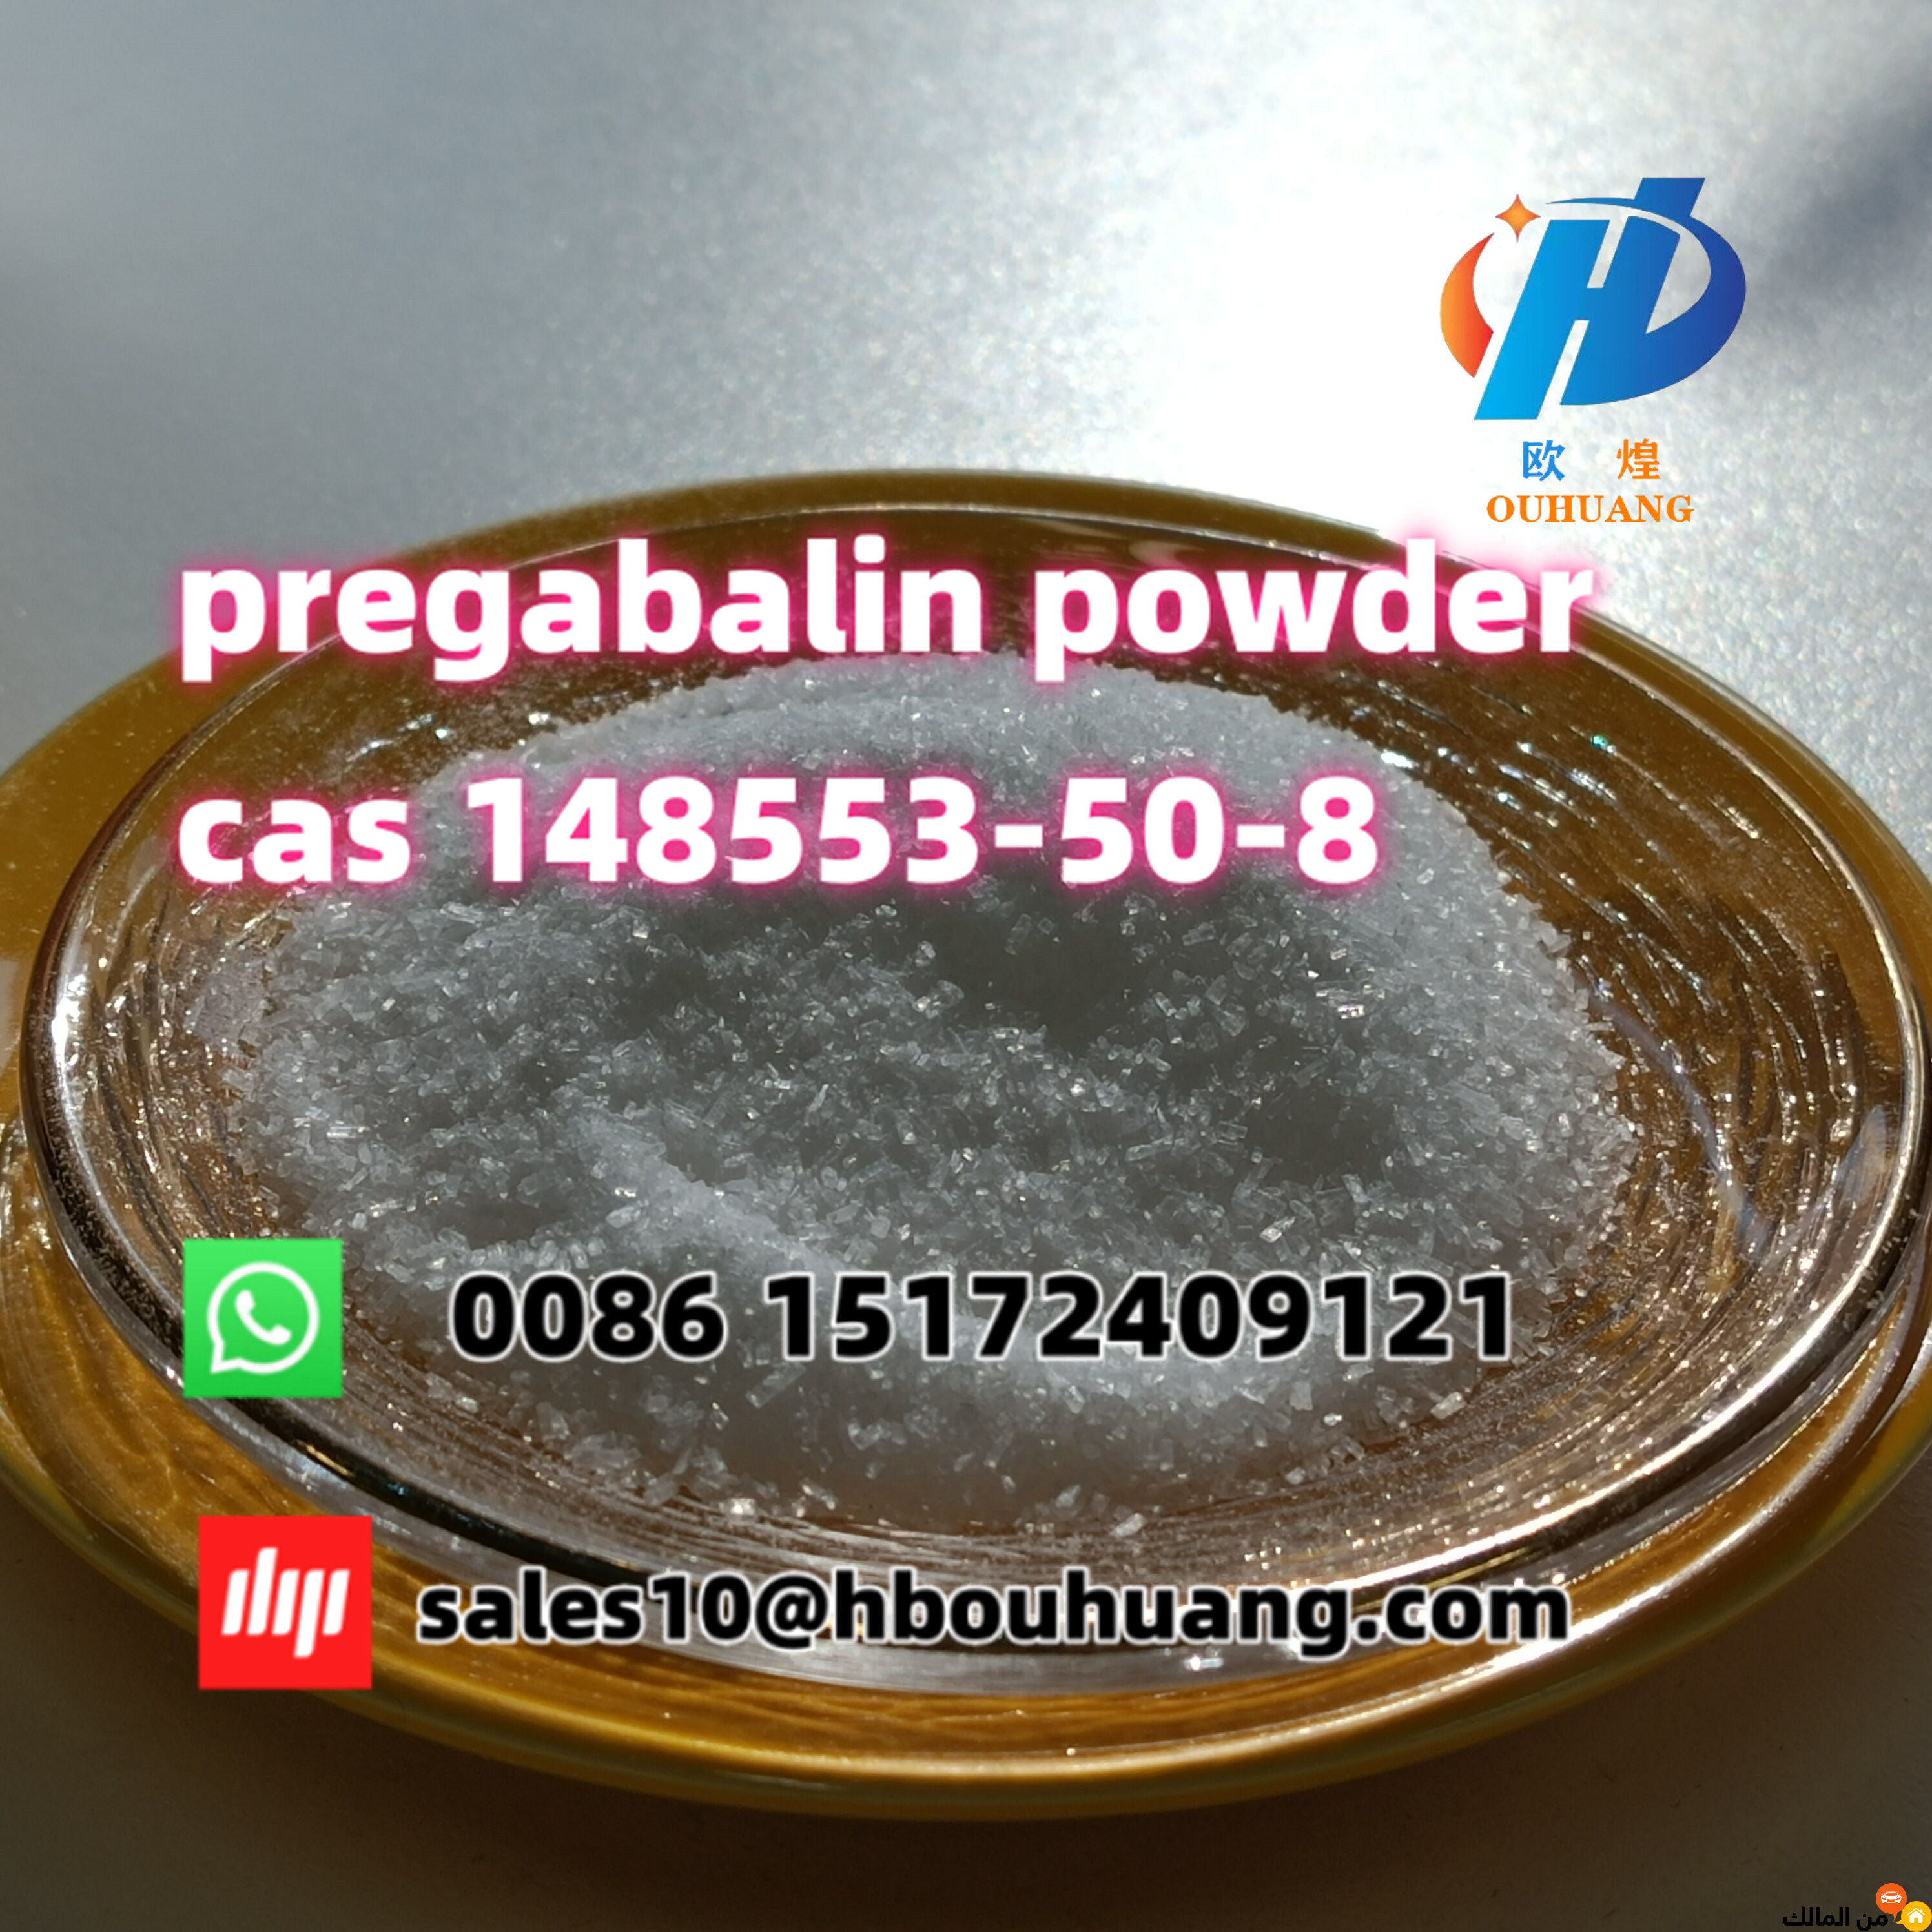 China Pregabalin Powder cas 148553-50-8 Manufacturers Suppliers Factory